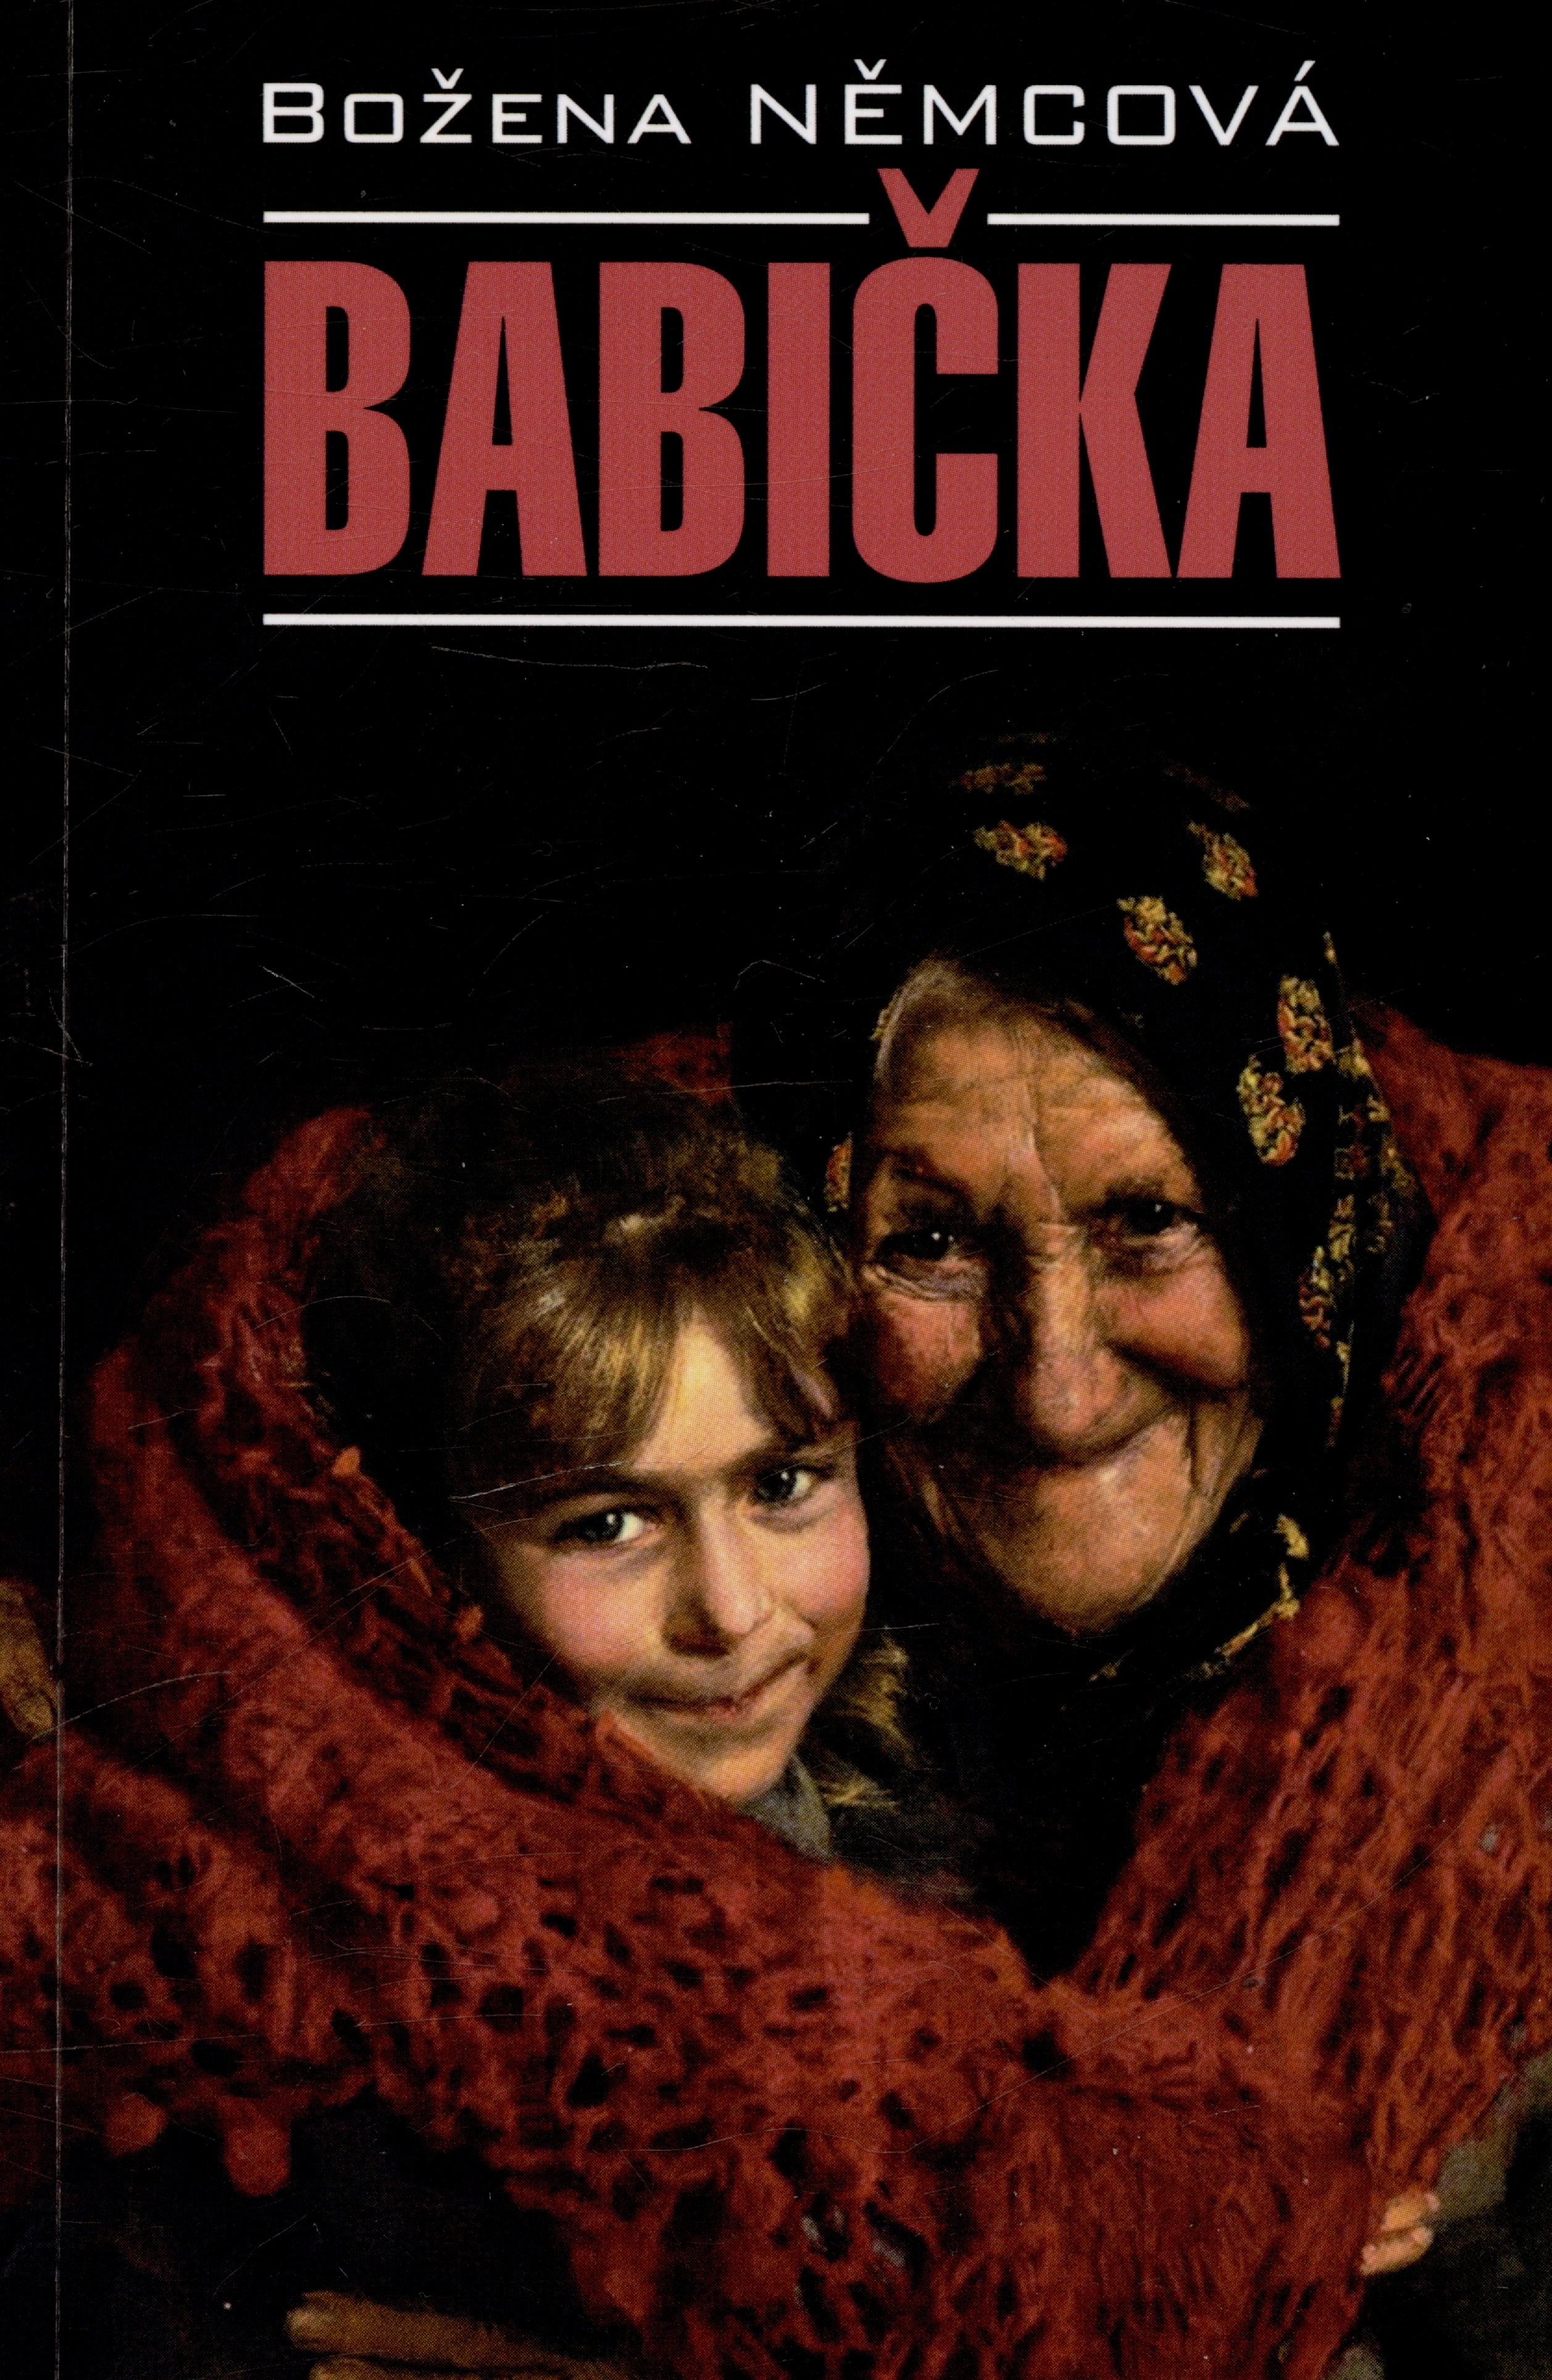 Немцова Божена - Babicka / Бабушка ( книга для чтения на чешском языке)